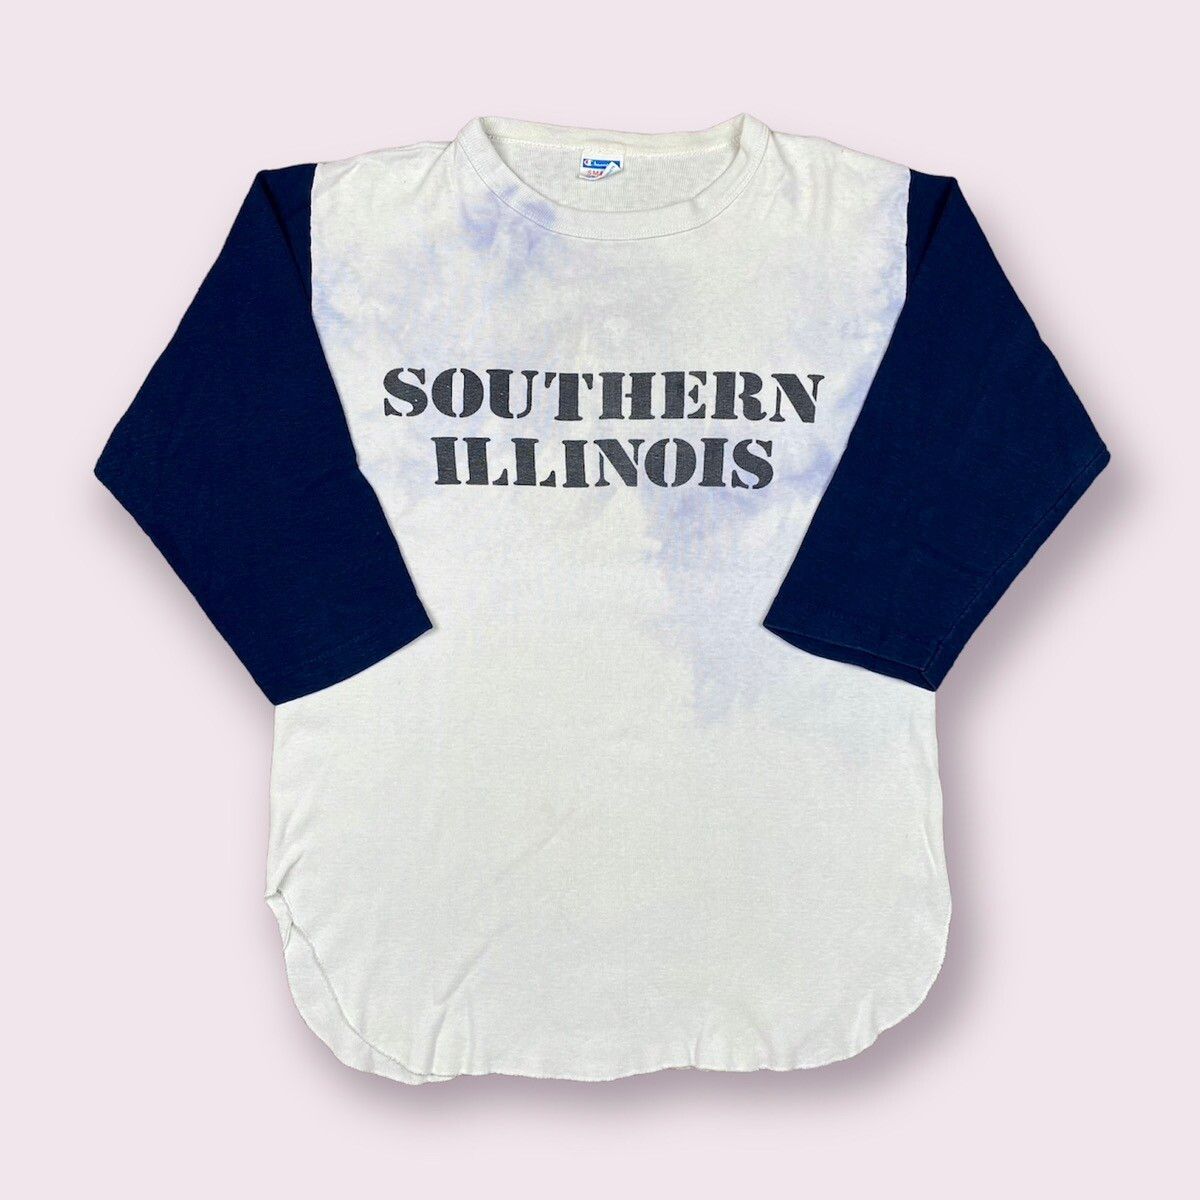 Vintage Vintage 80s Southern Illinois University T-Shirt Size US S / EU 44-46 / 1 - 1 Preview